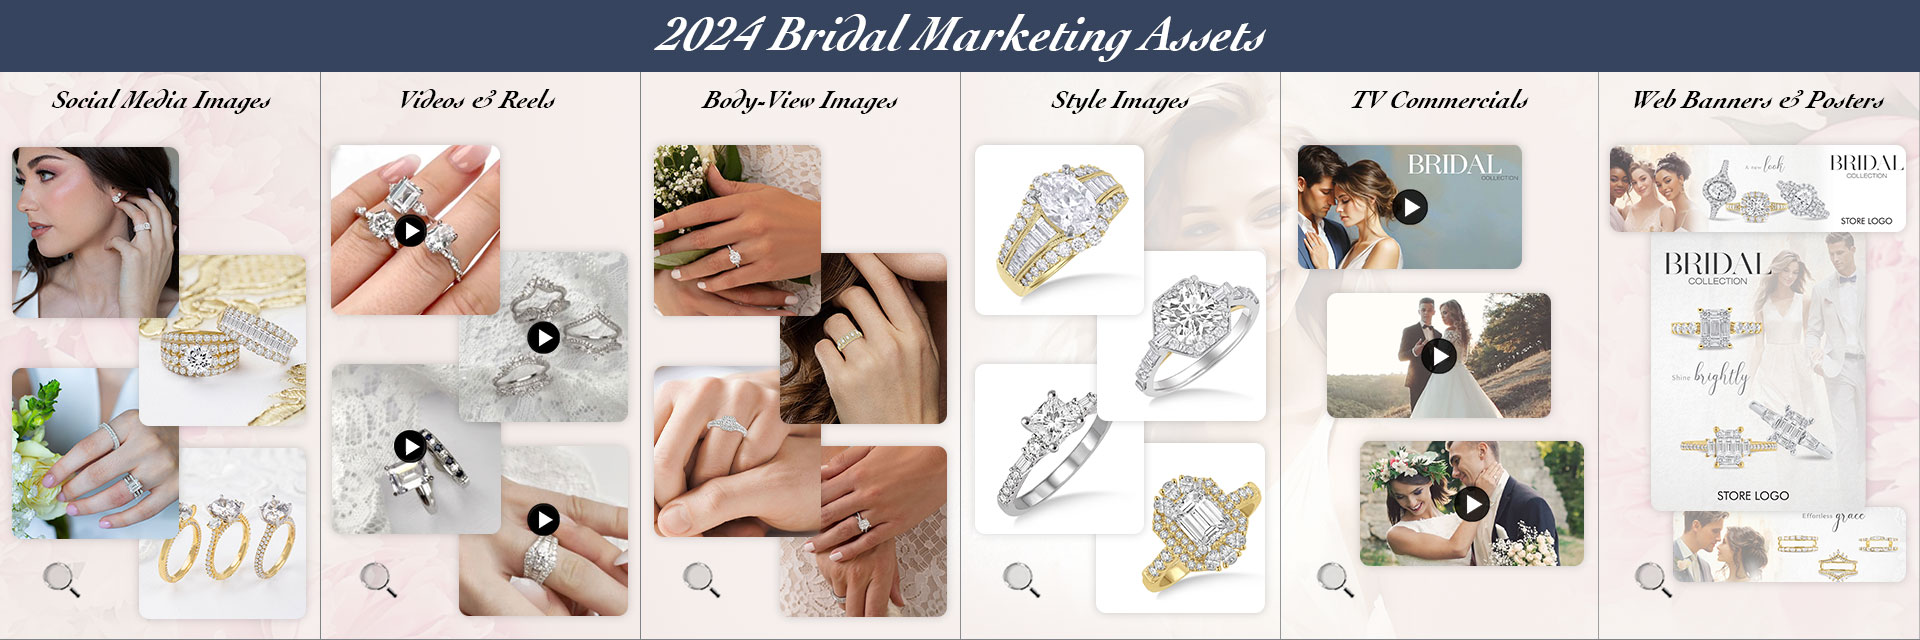 Bridal Marketing Assets 2024